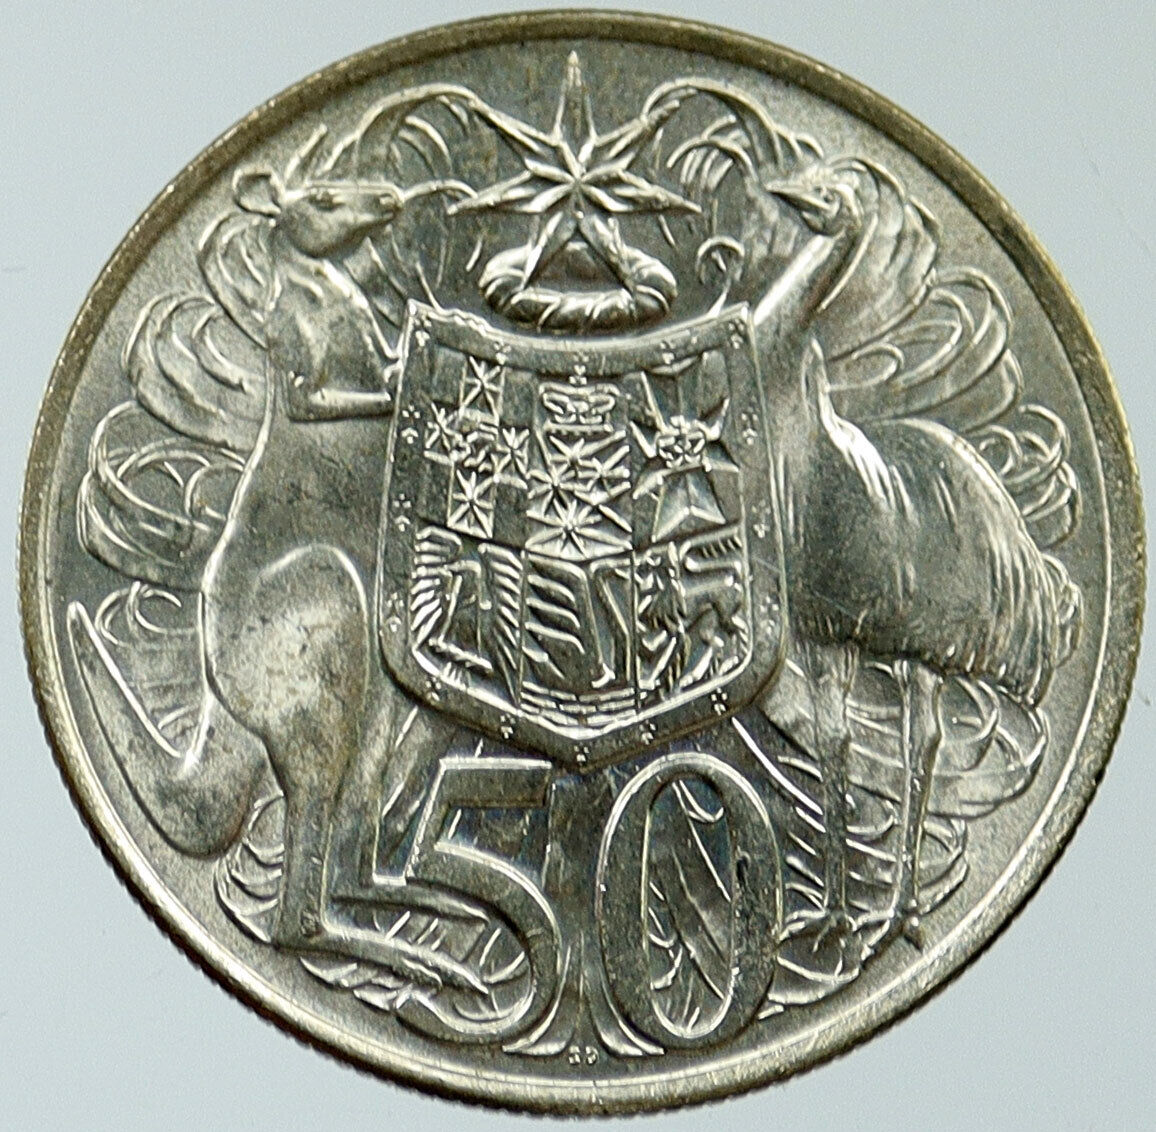 1966 AUSTRALIA UK Queen Elizabeth II with Kangaroos Silver 50 Cents Coin i116802